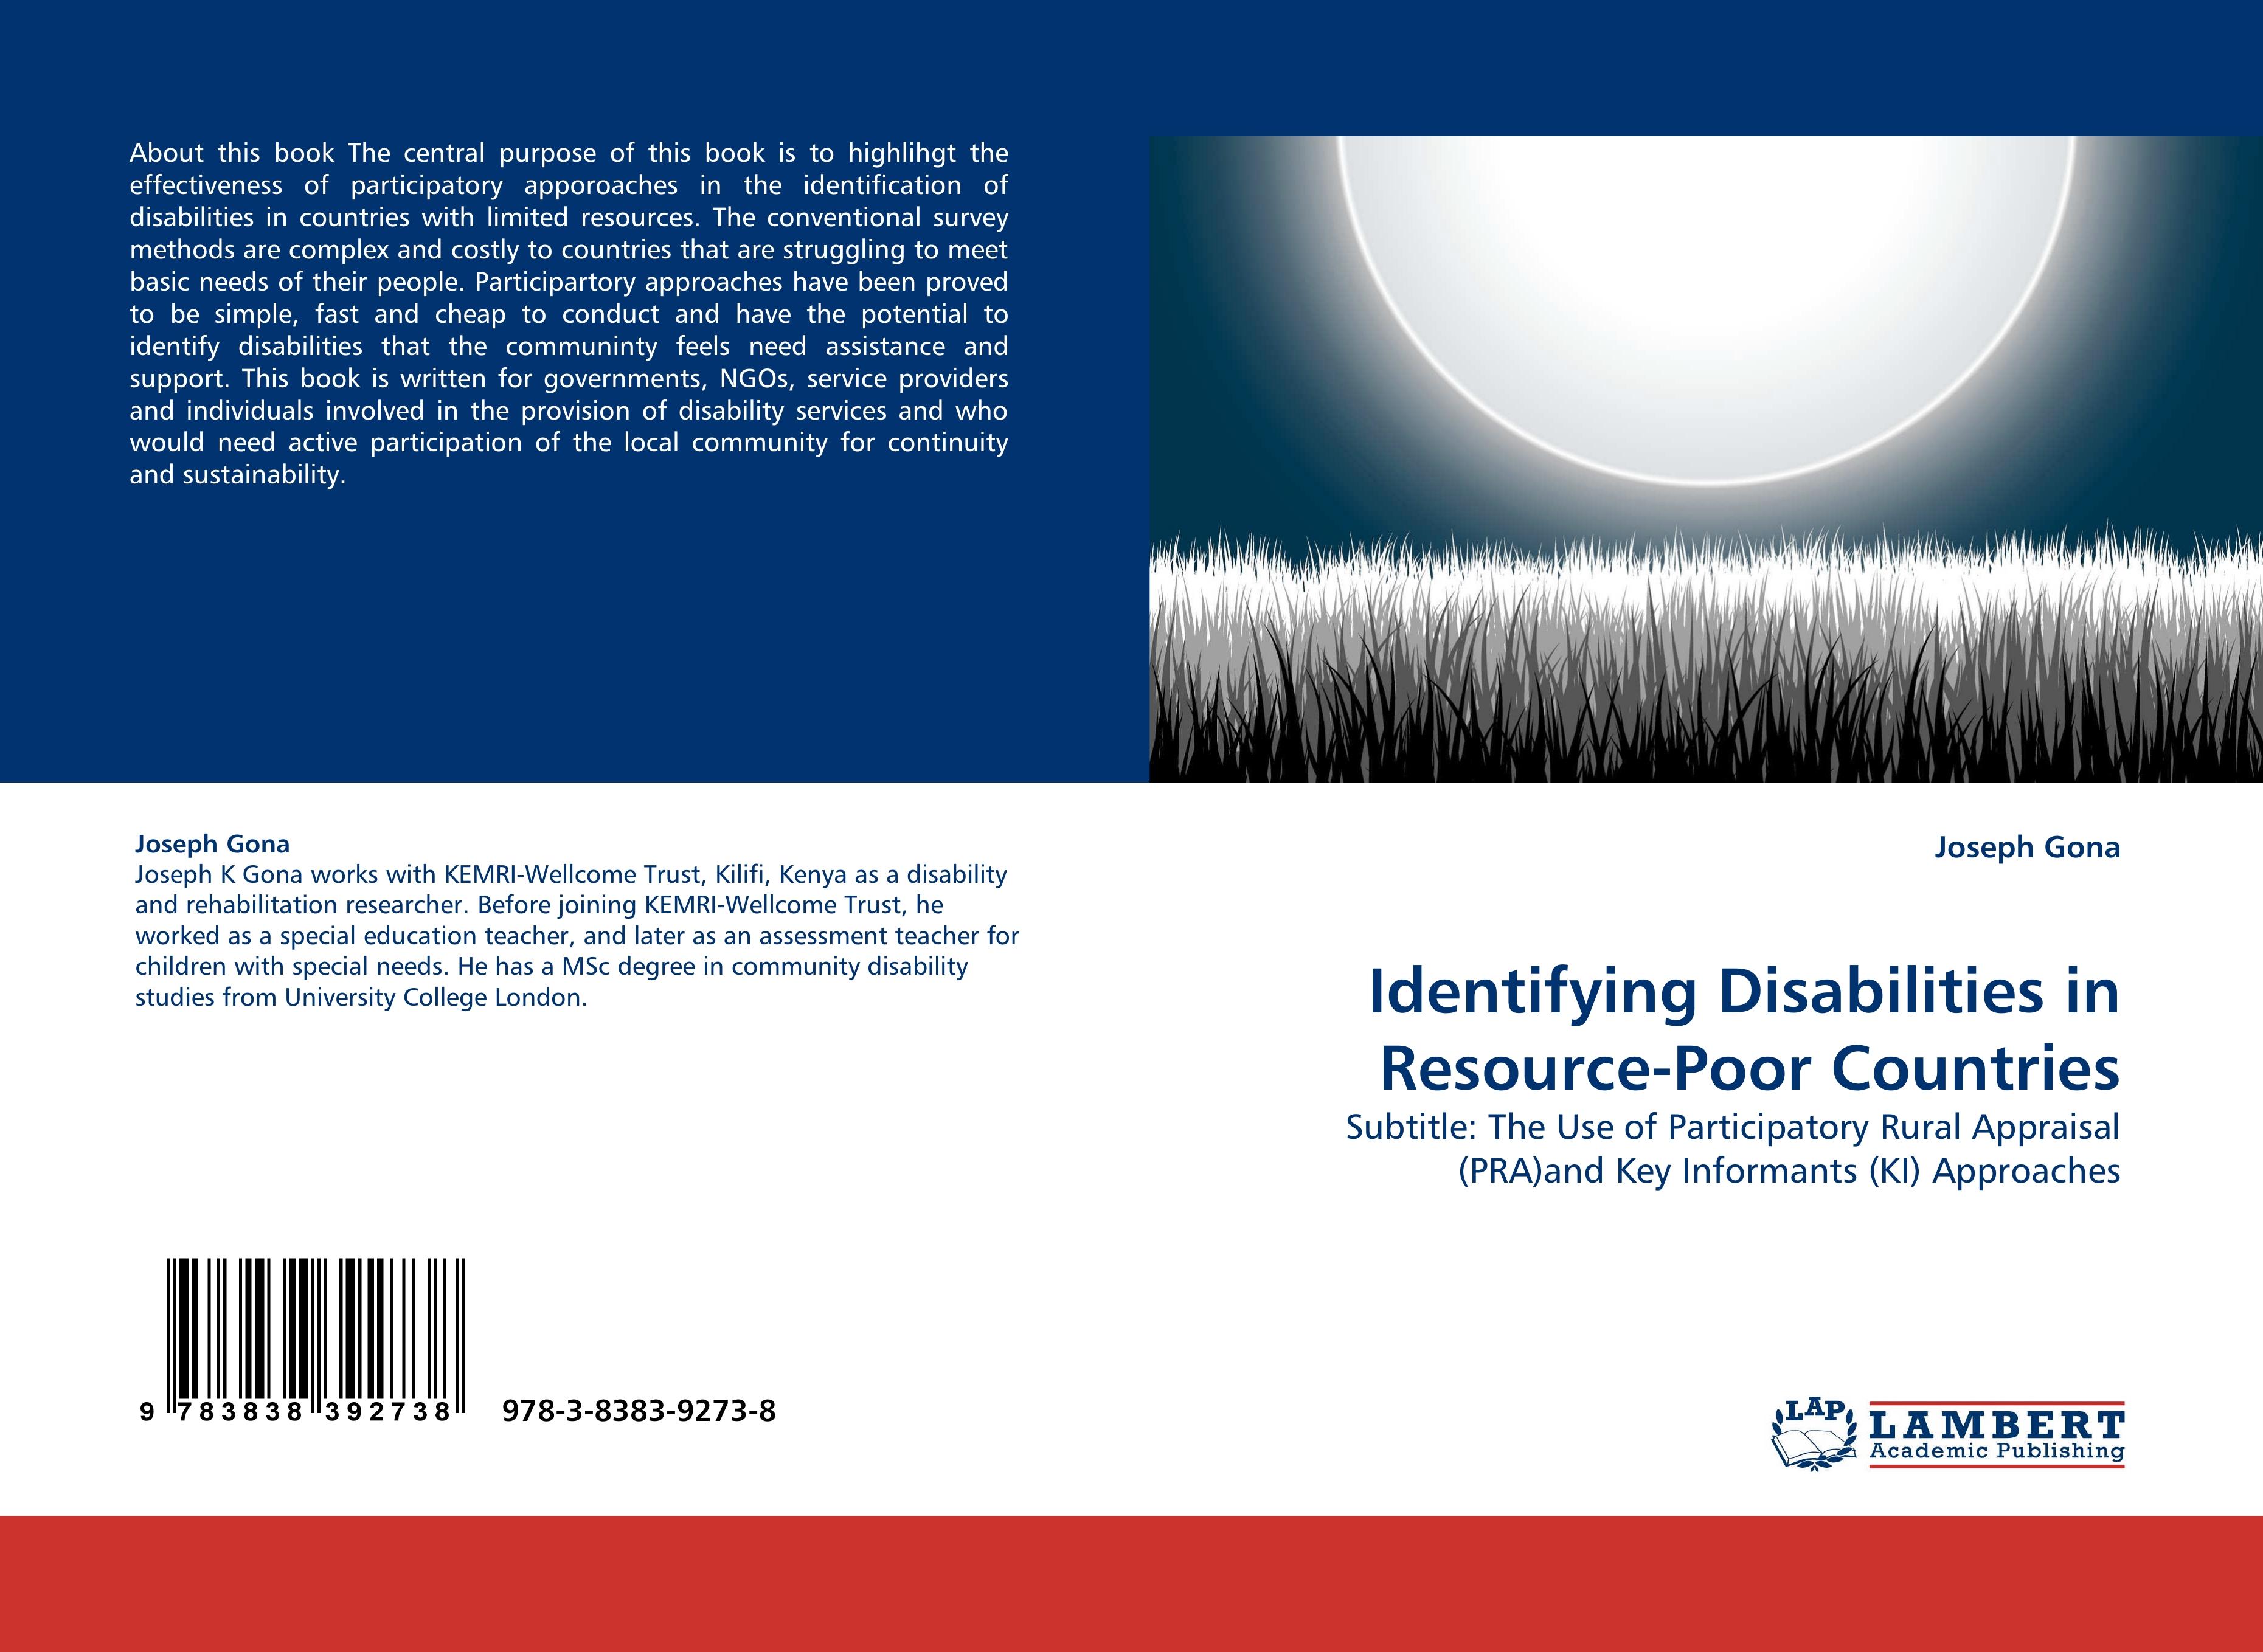 Identifying Disabilities in Resource-Poor Countries - Joseph Gona